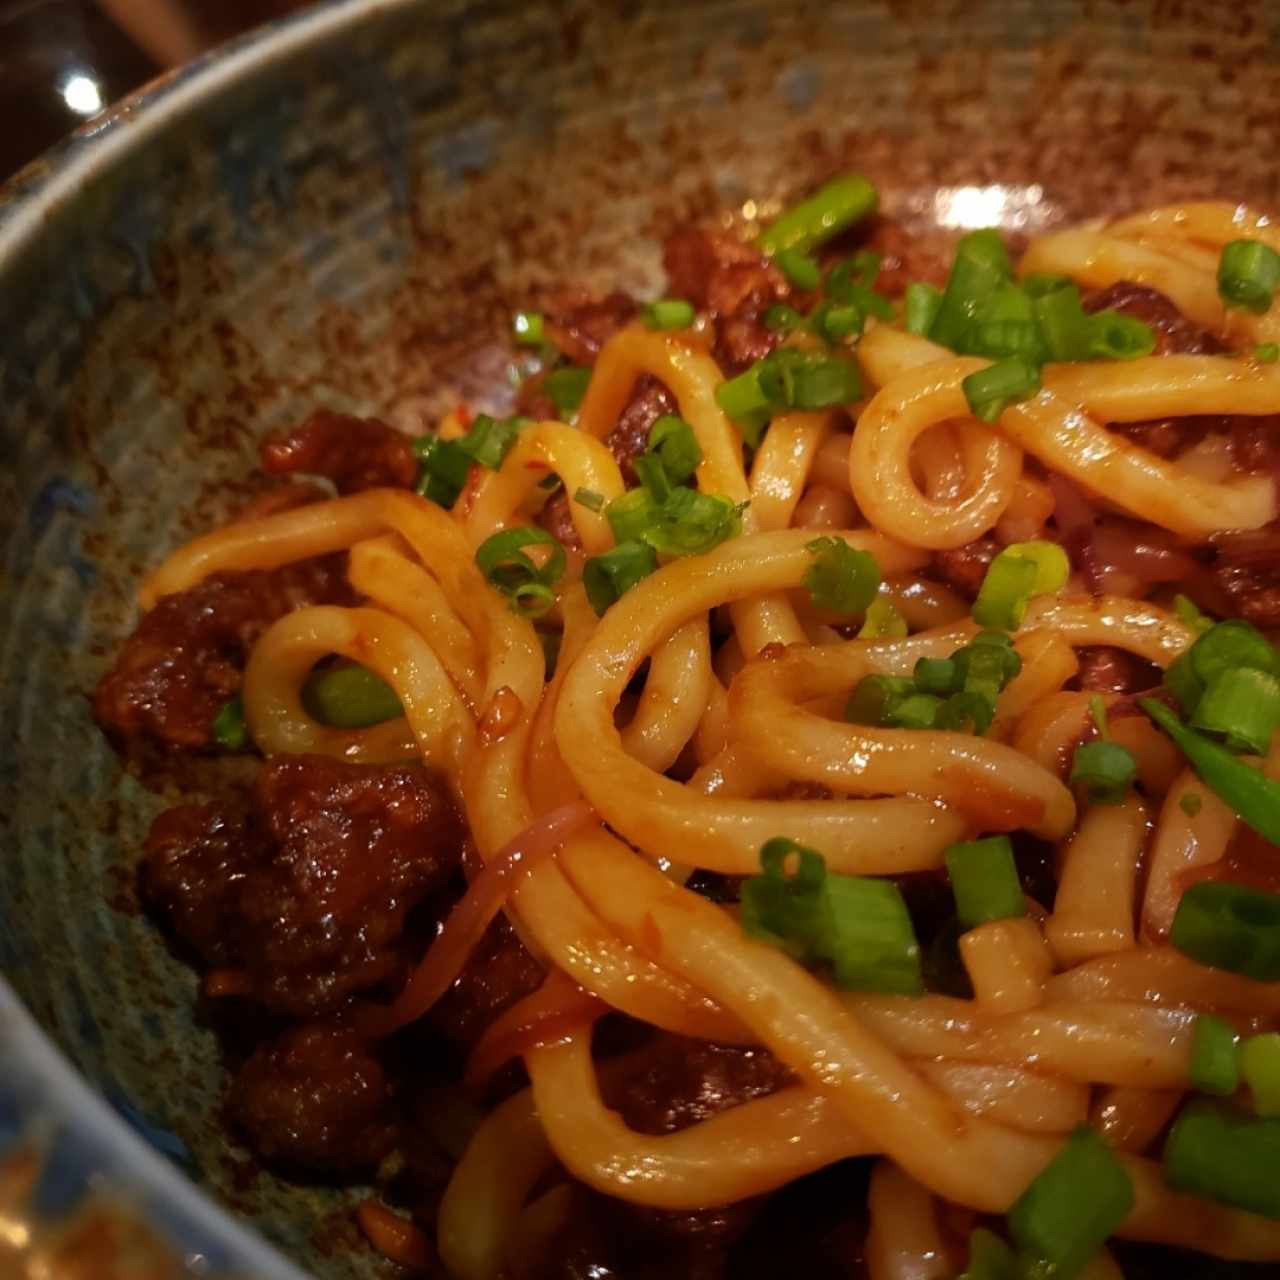 Mongolian Beef Noodles